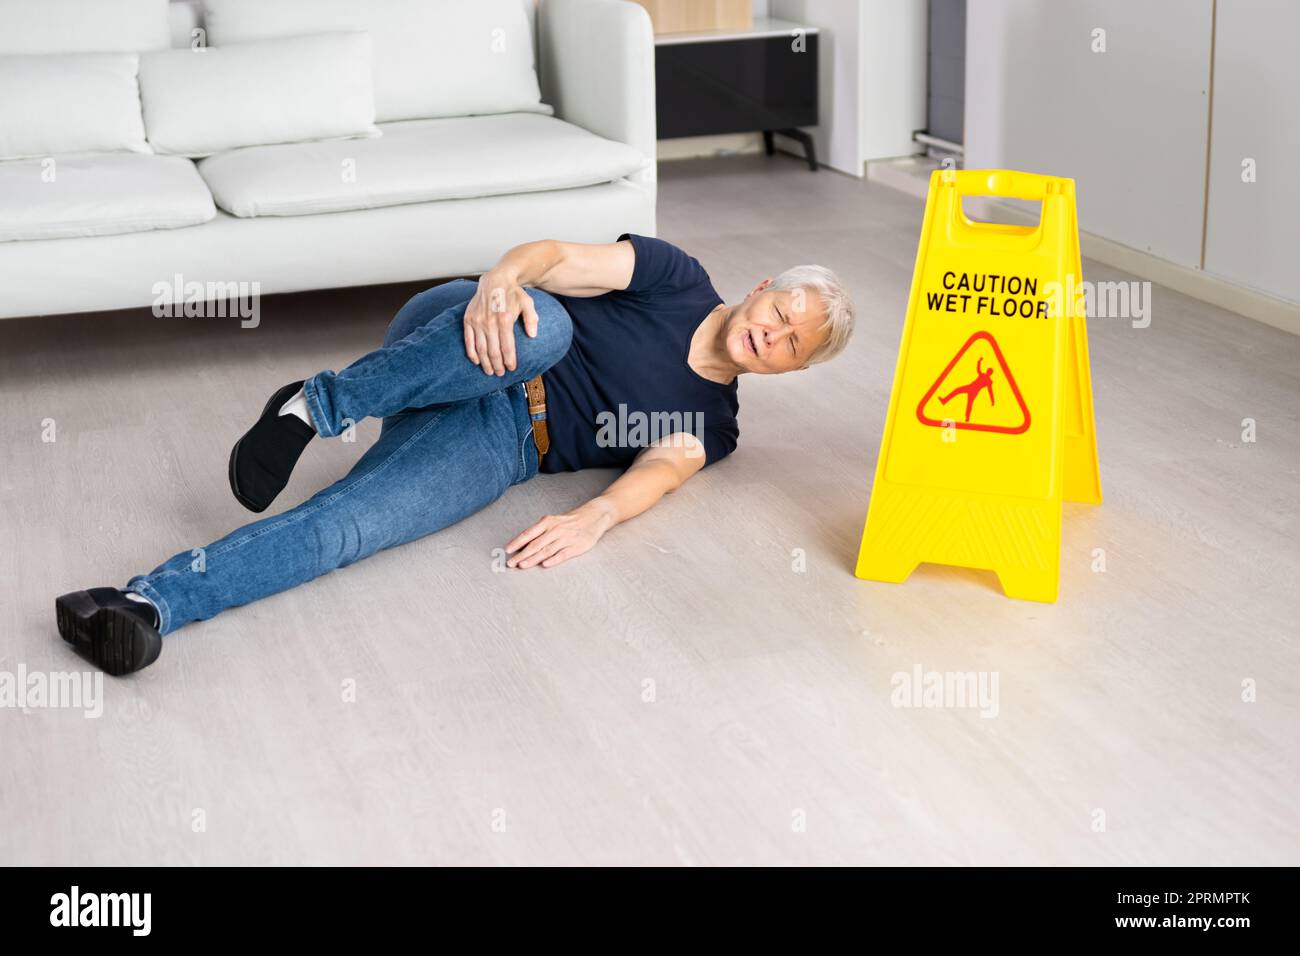 Slip Fall Accident. Floor Sign Caution Stock Photo